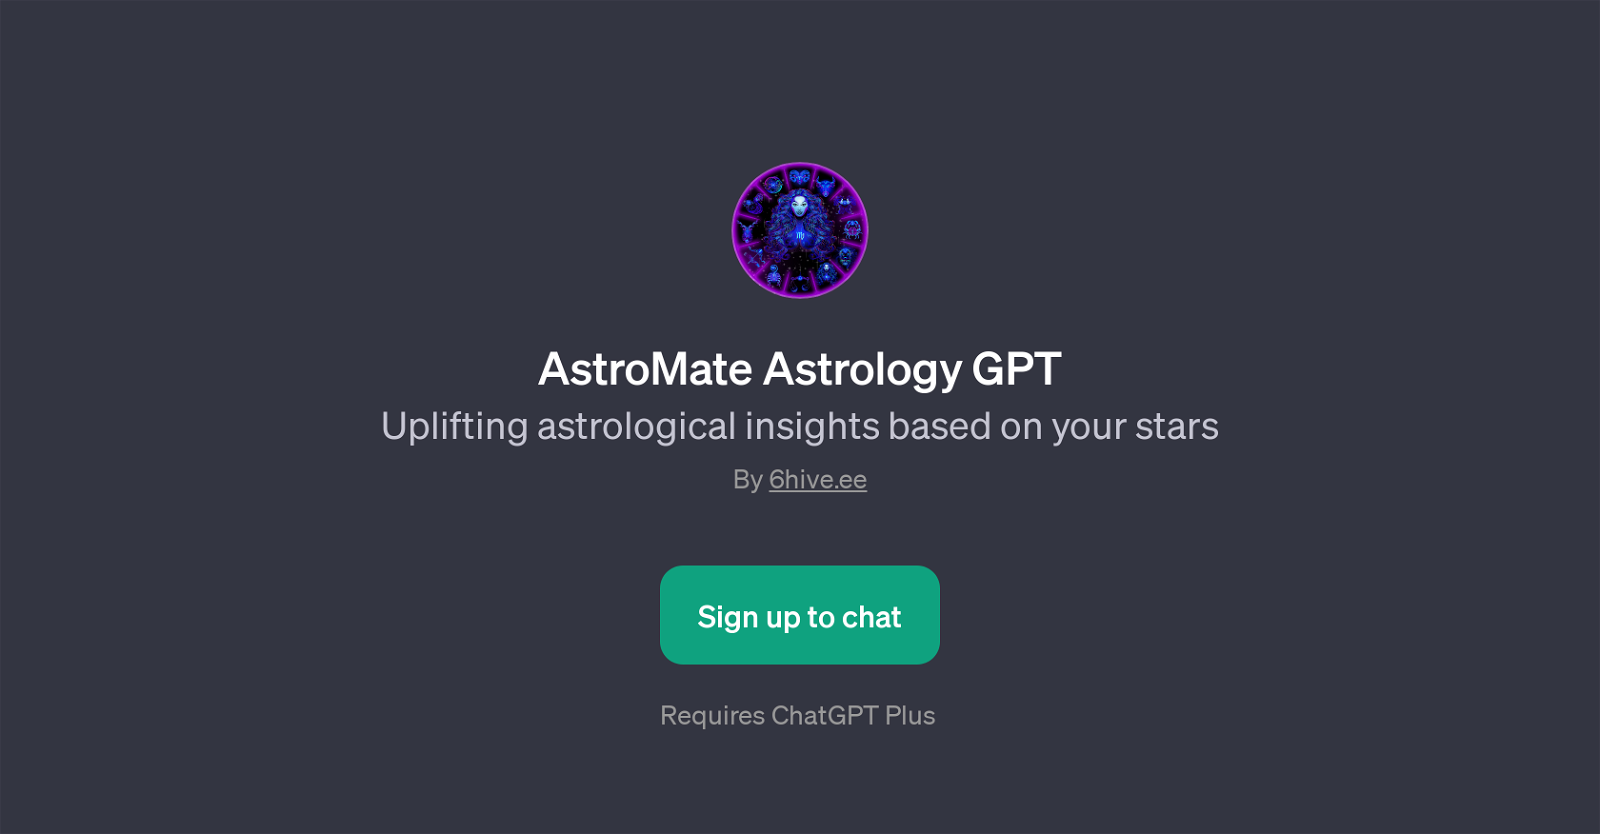 AstroMate Astrology GPT website